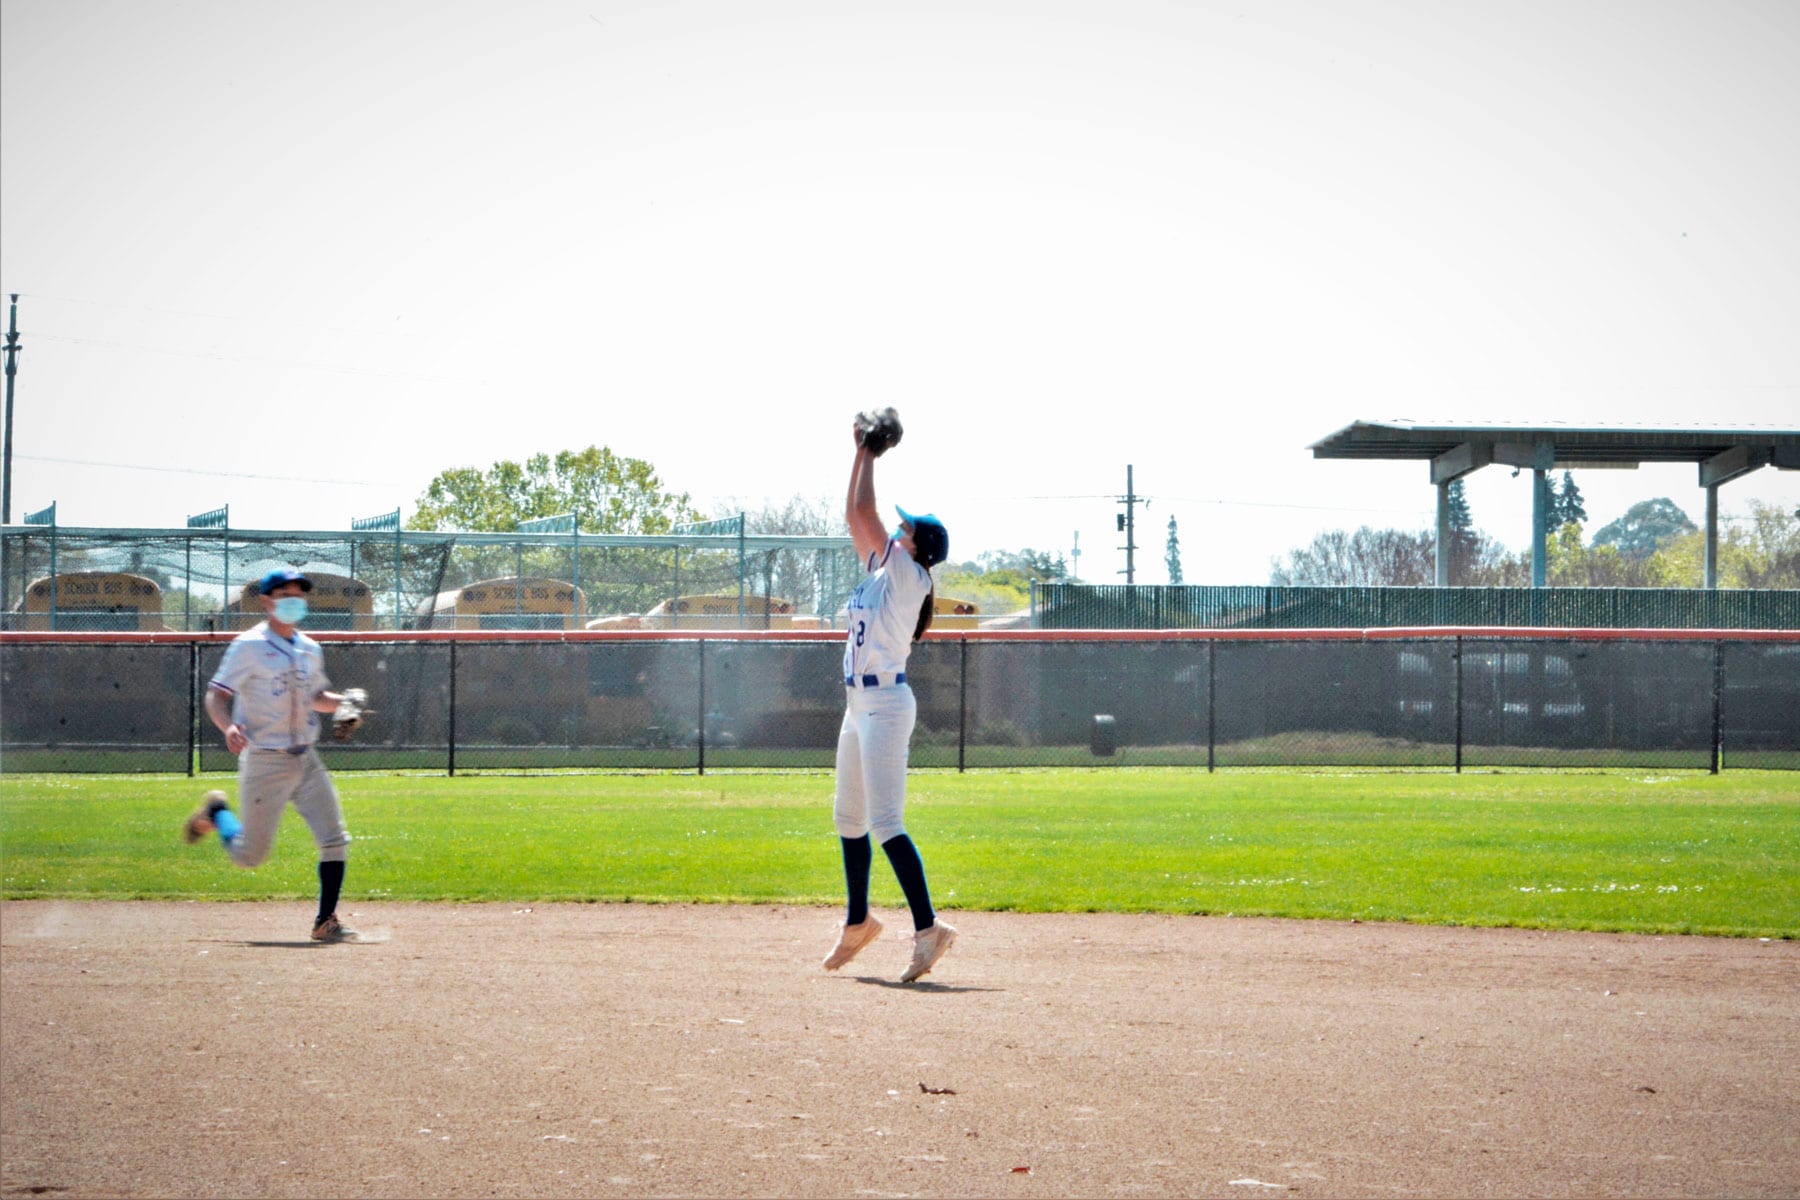 Maddie Etheridge catching a ball on the baseball field.